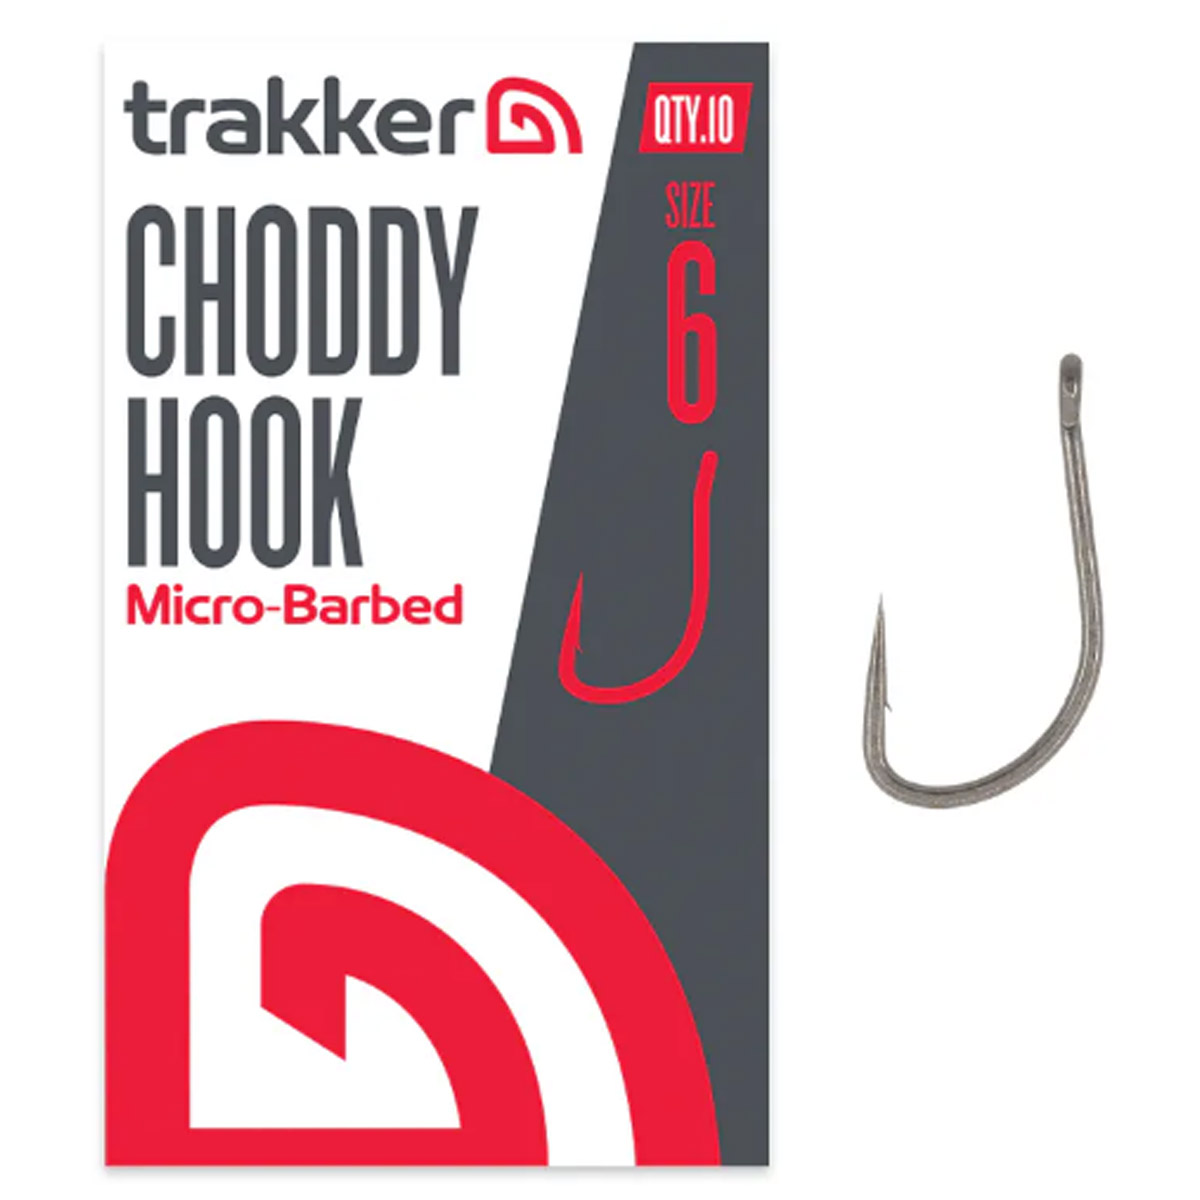 Trakker Choddy Hooks